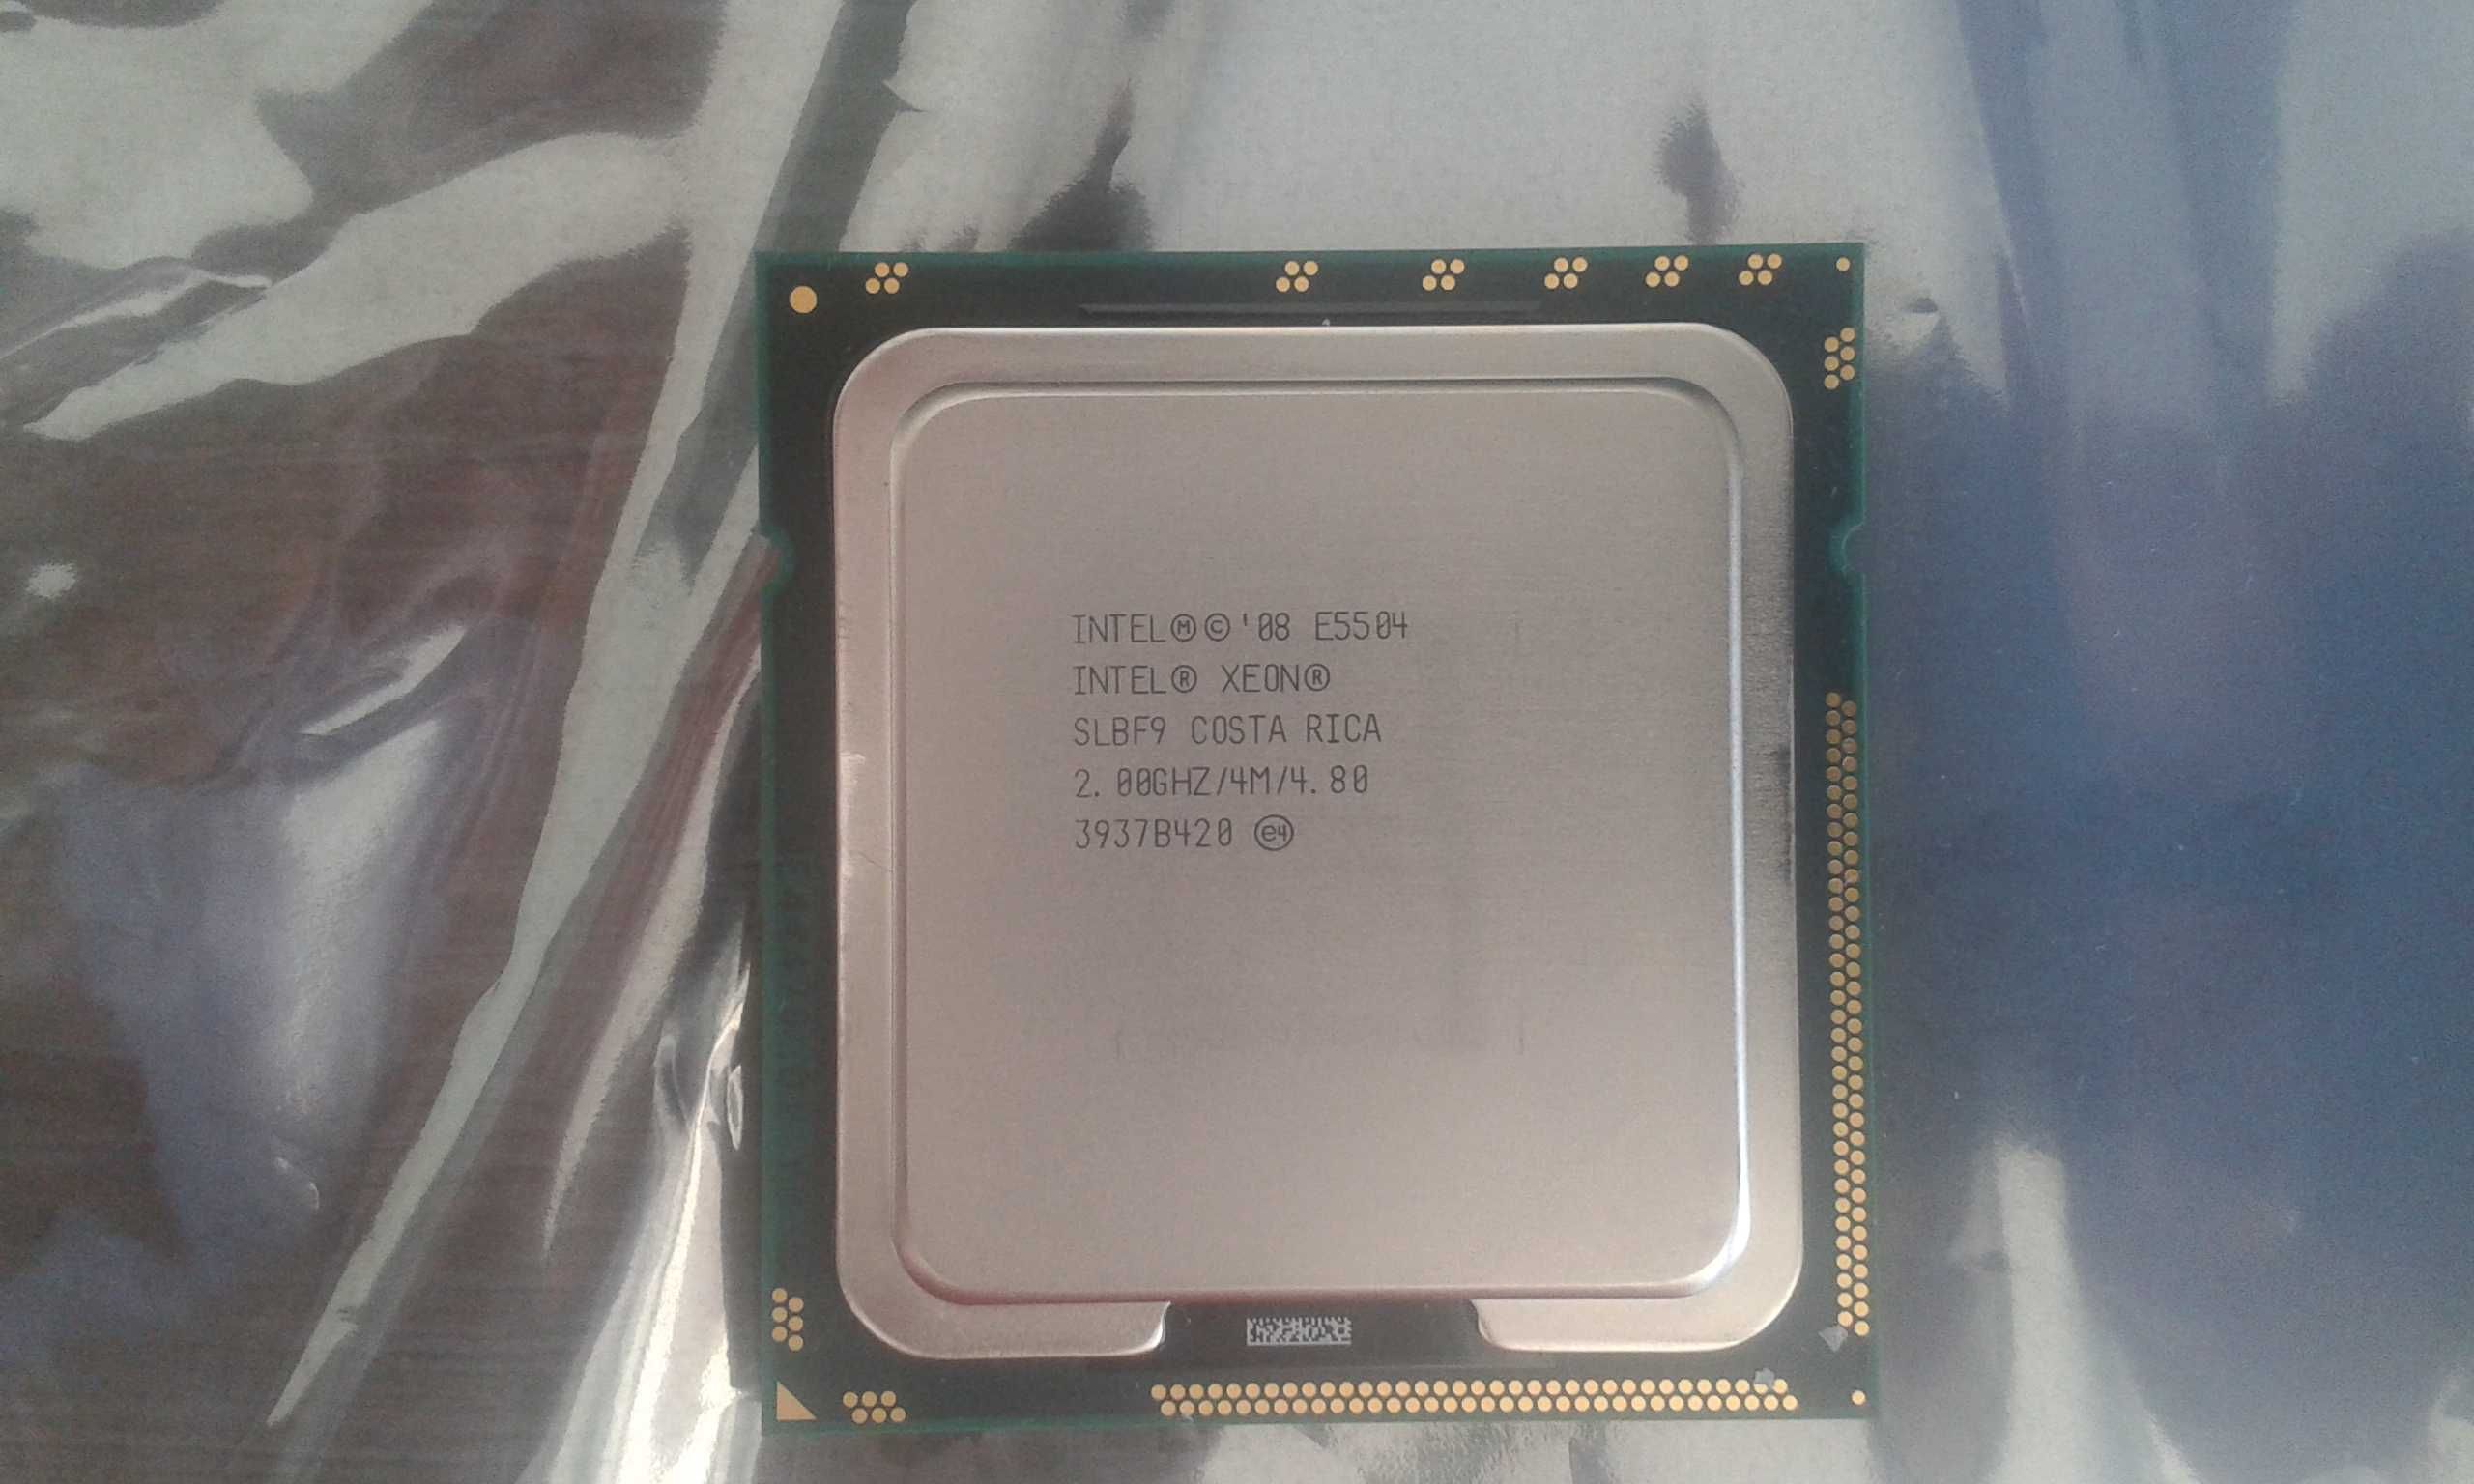 2 Intel Xeon E5504 Workstation/Server